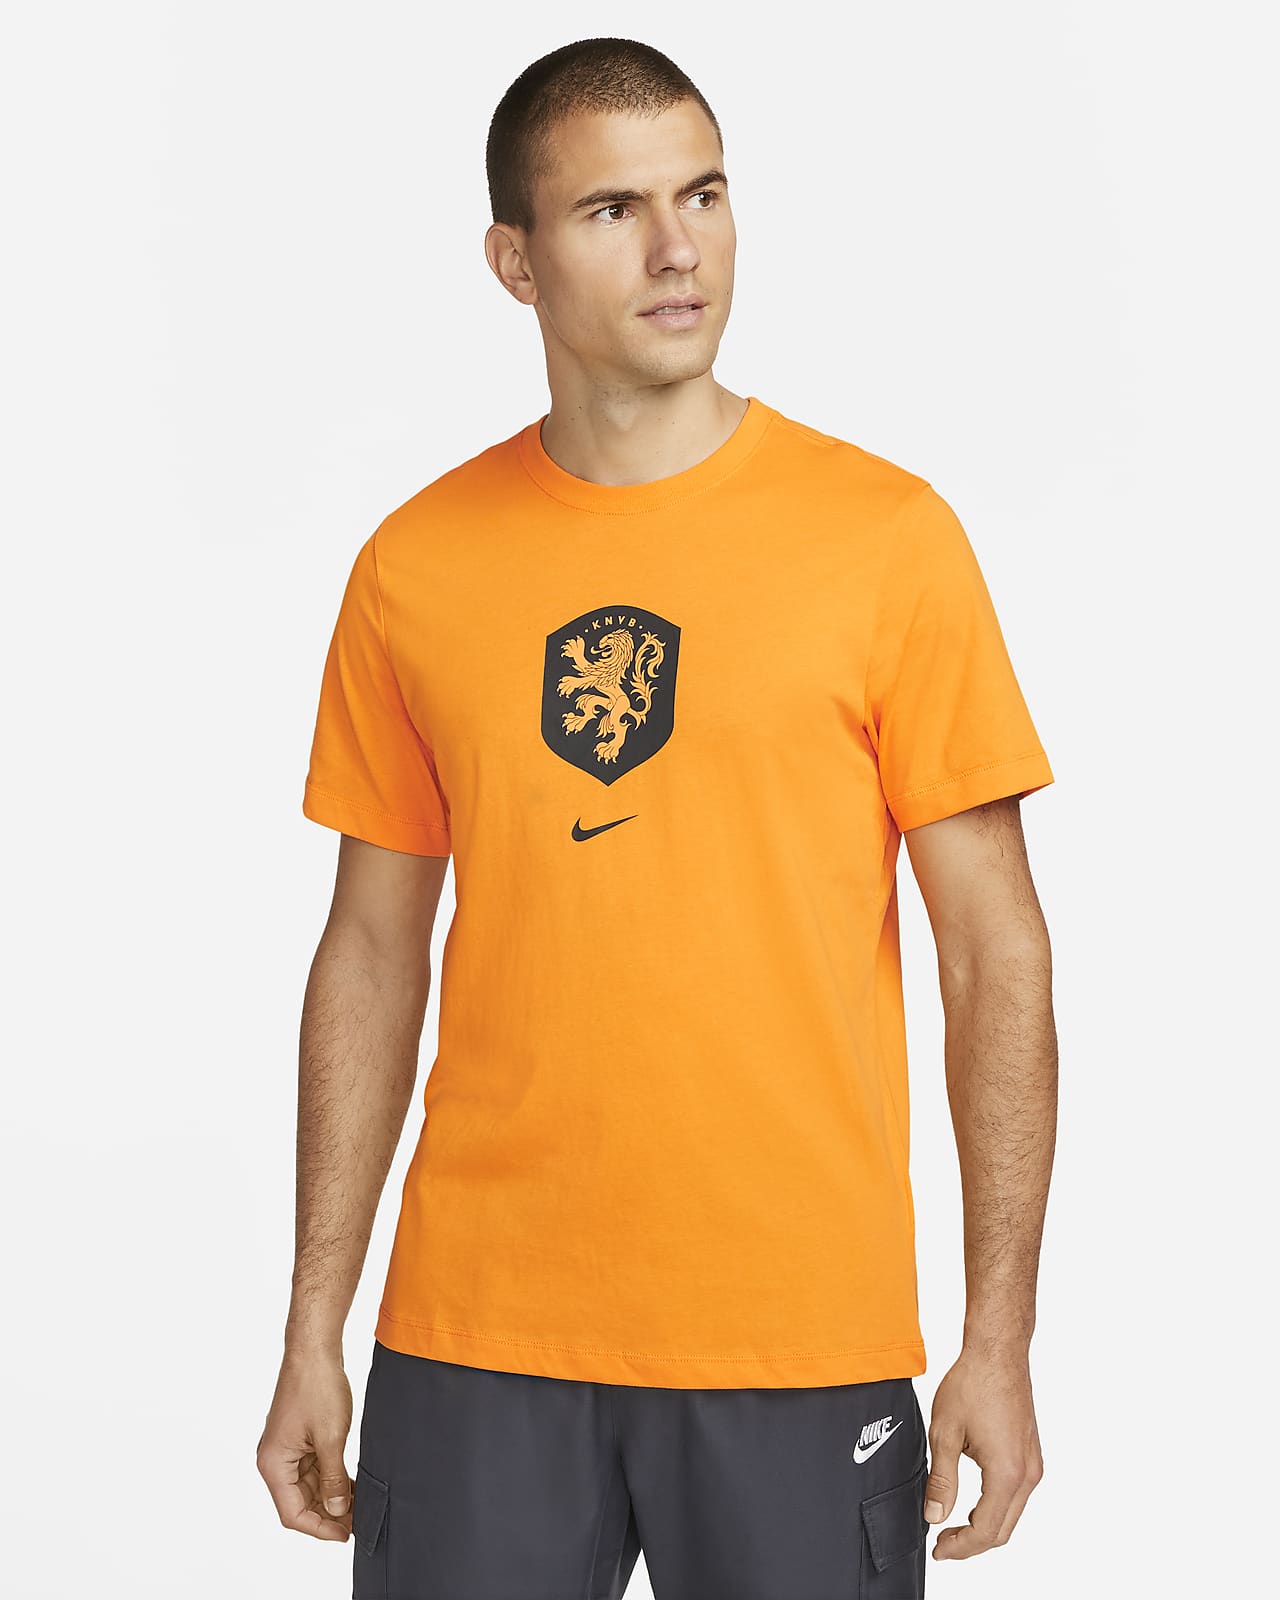 Netherlands Men's Nike T-Shirt. Nike PH